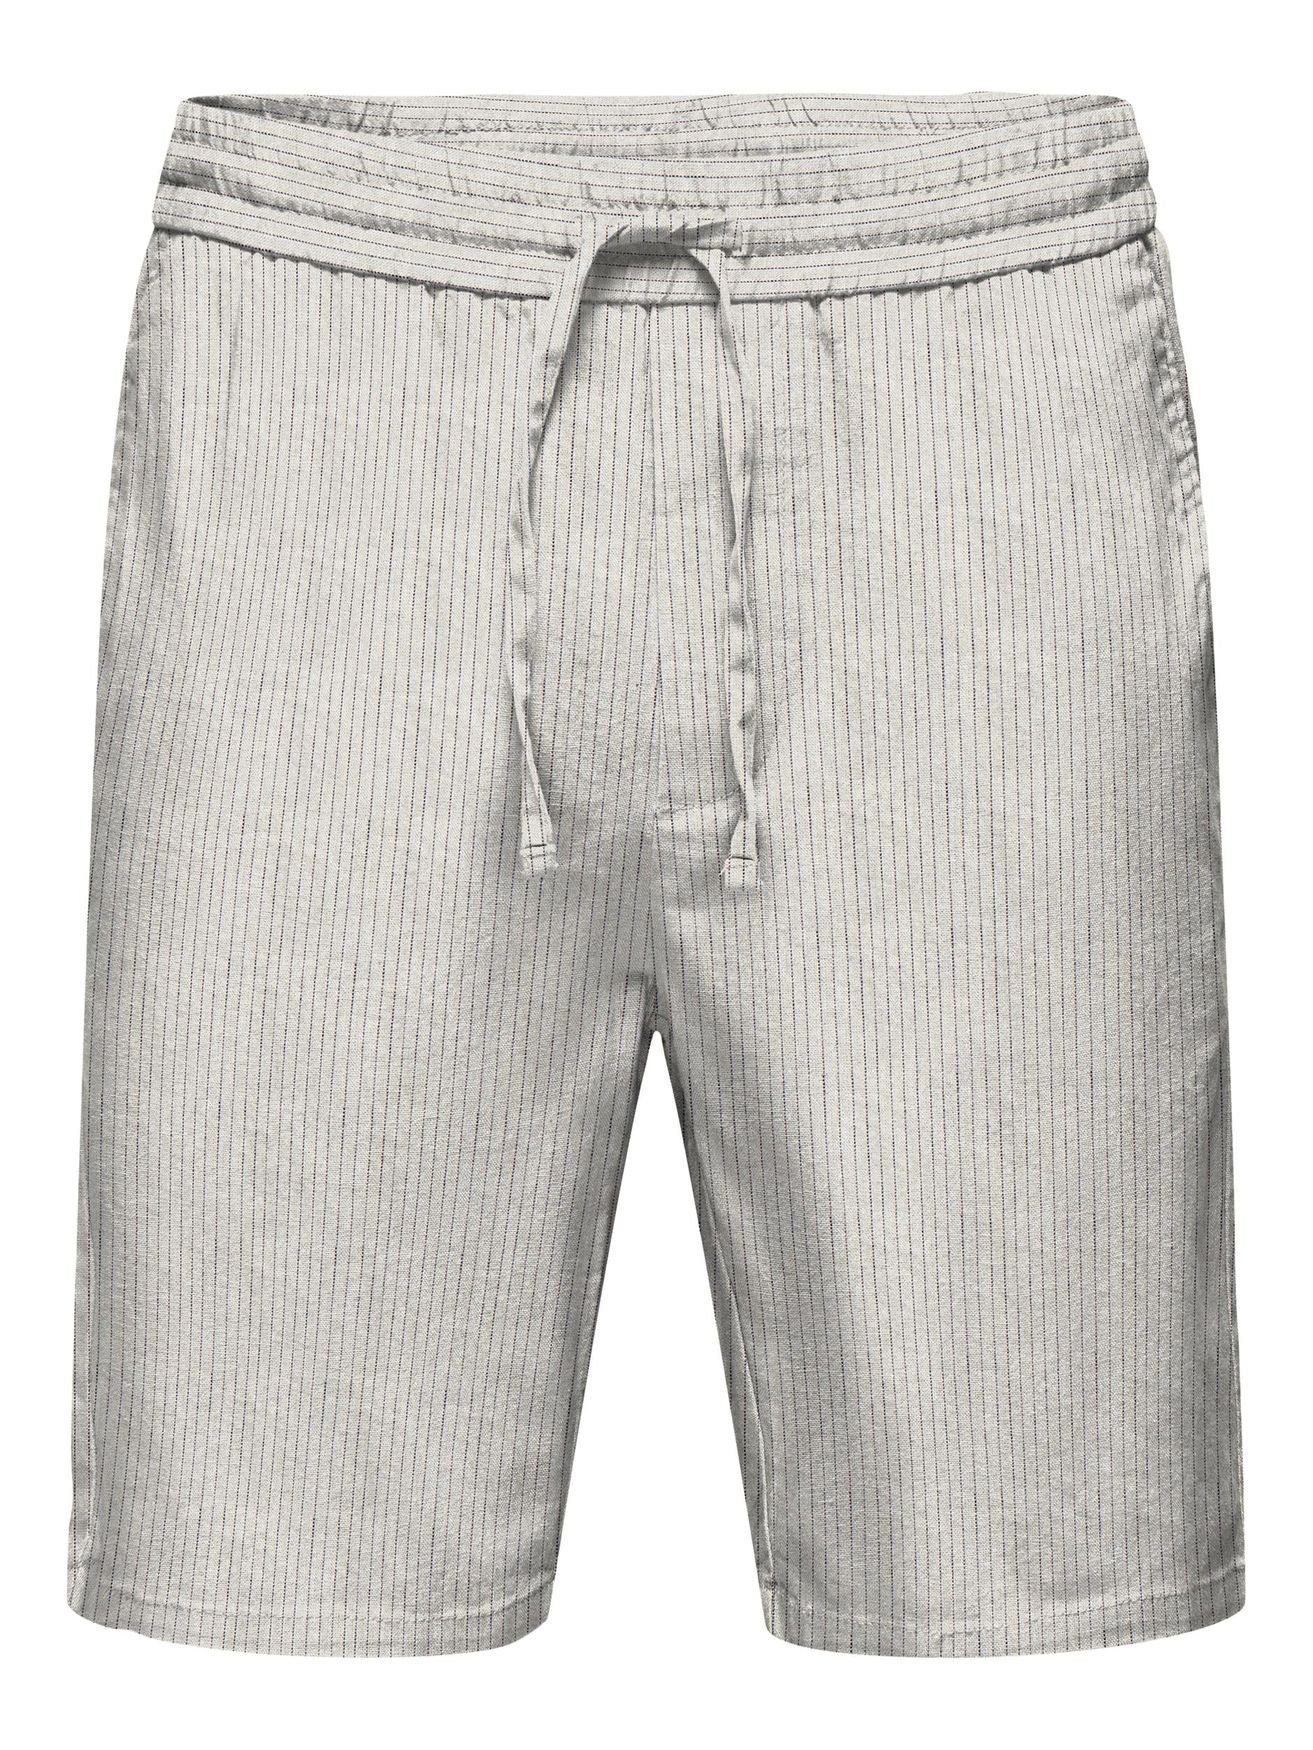 ONLY & SONS Chinoshorts Kurze Chino Shorts ONSLINUS 5055 in Grau | Shorts